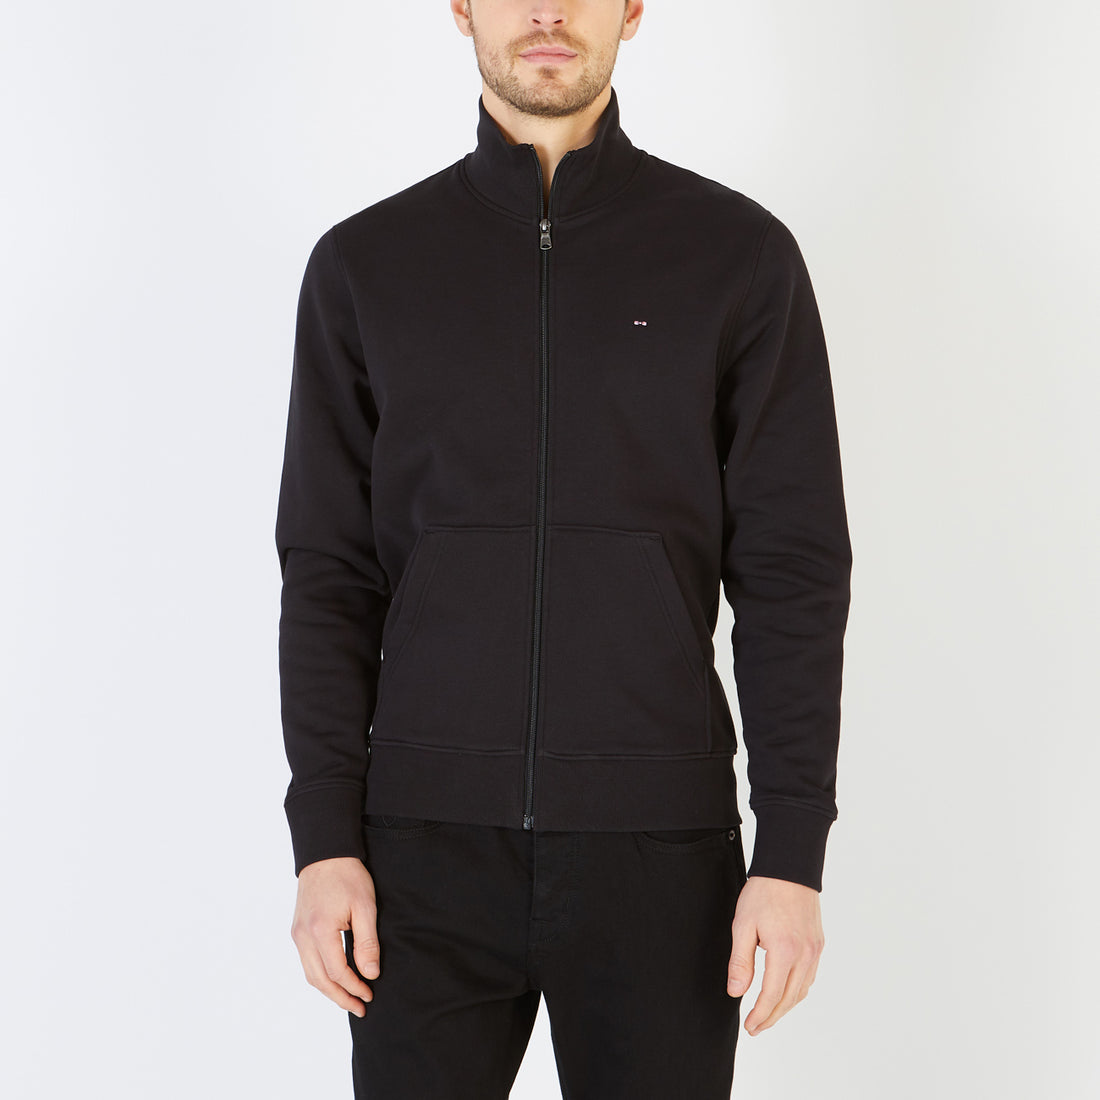 Plain Black Zipped High-Neck Sweatshirt